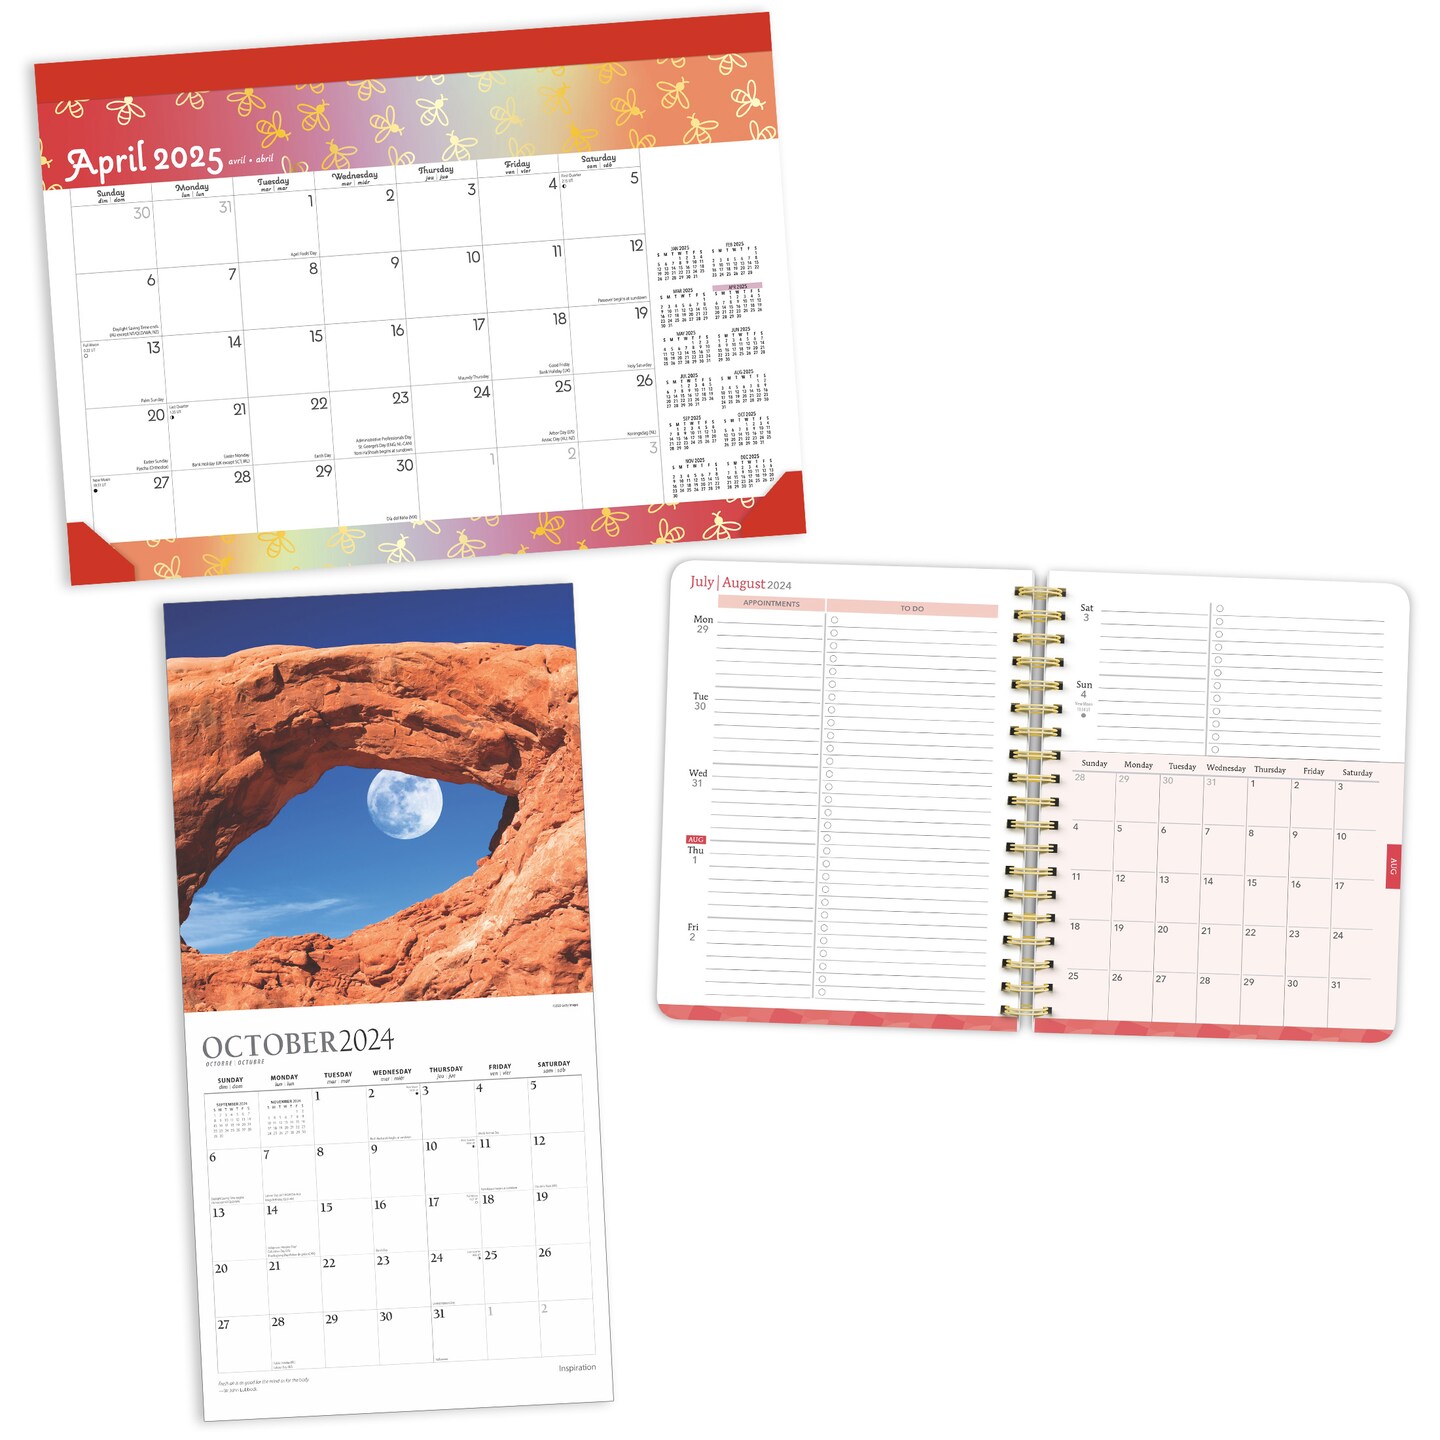 Busy Bees and Inspiration 2025 18 Months Bundle | Desk Pad, Desk Planner, and Square Wall Calendar | July 2024 - December 2025 | Plato | Motivation Design